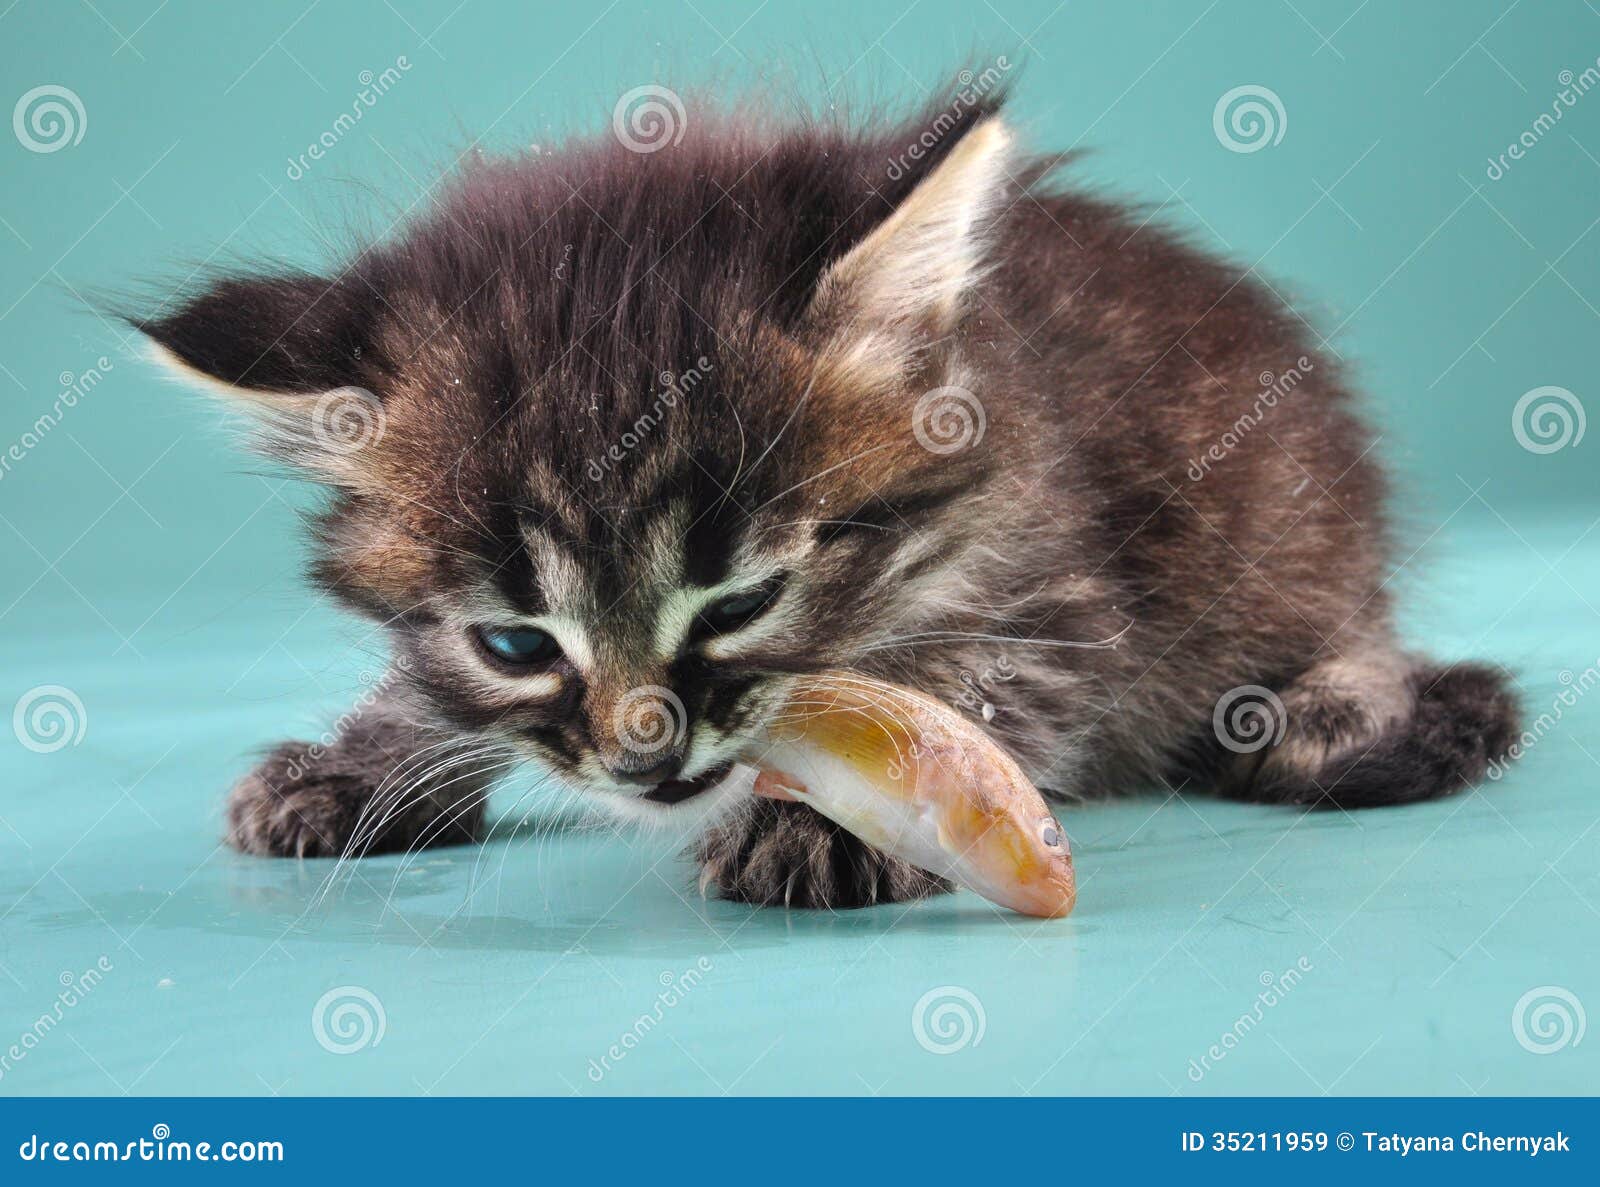 small kitten eats a fish